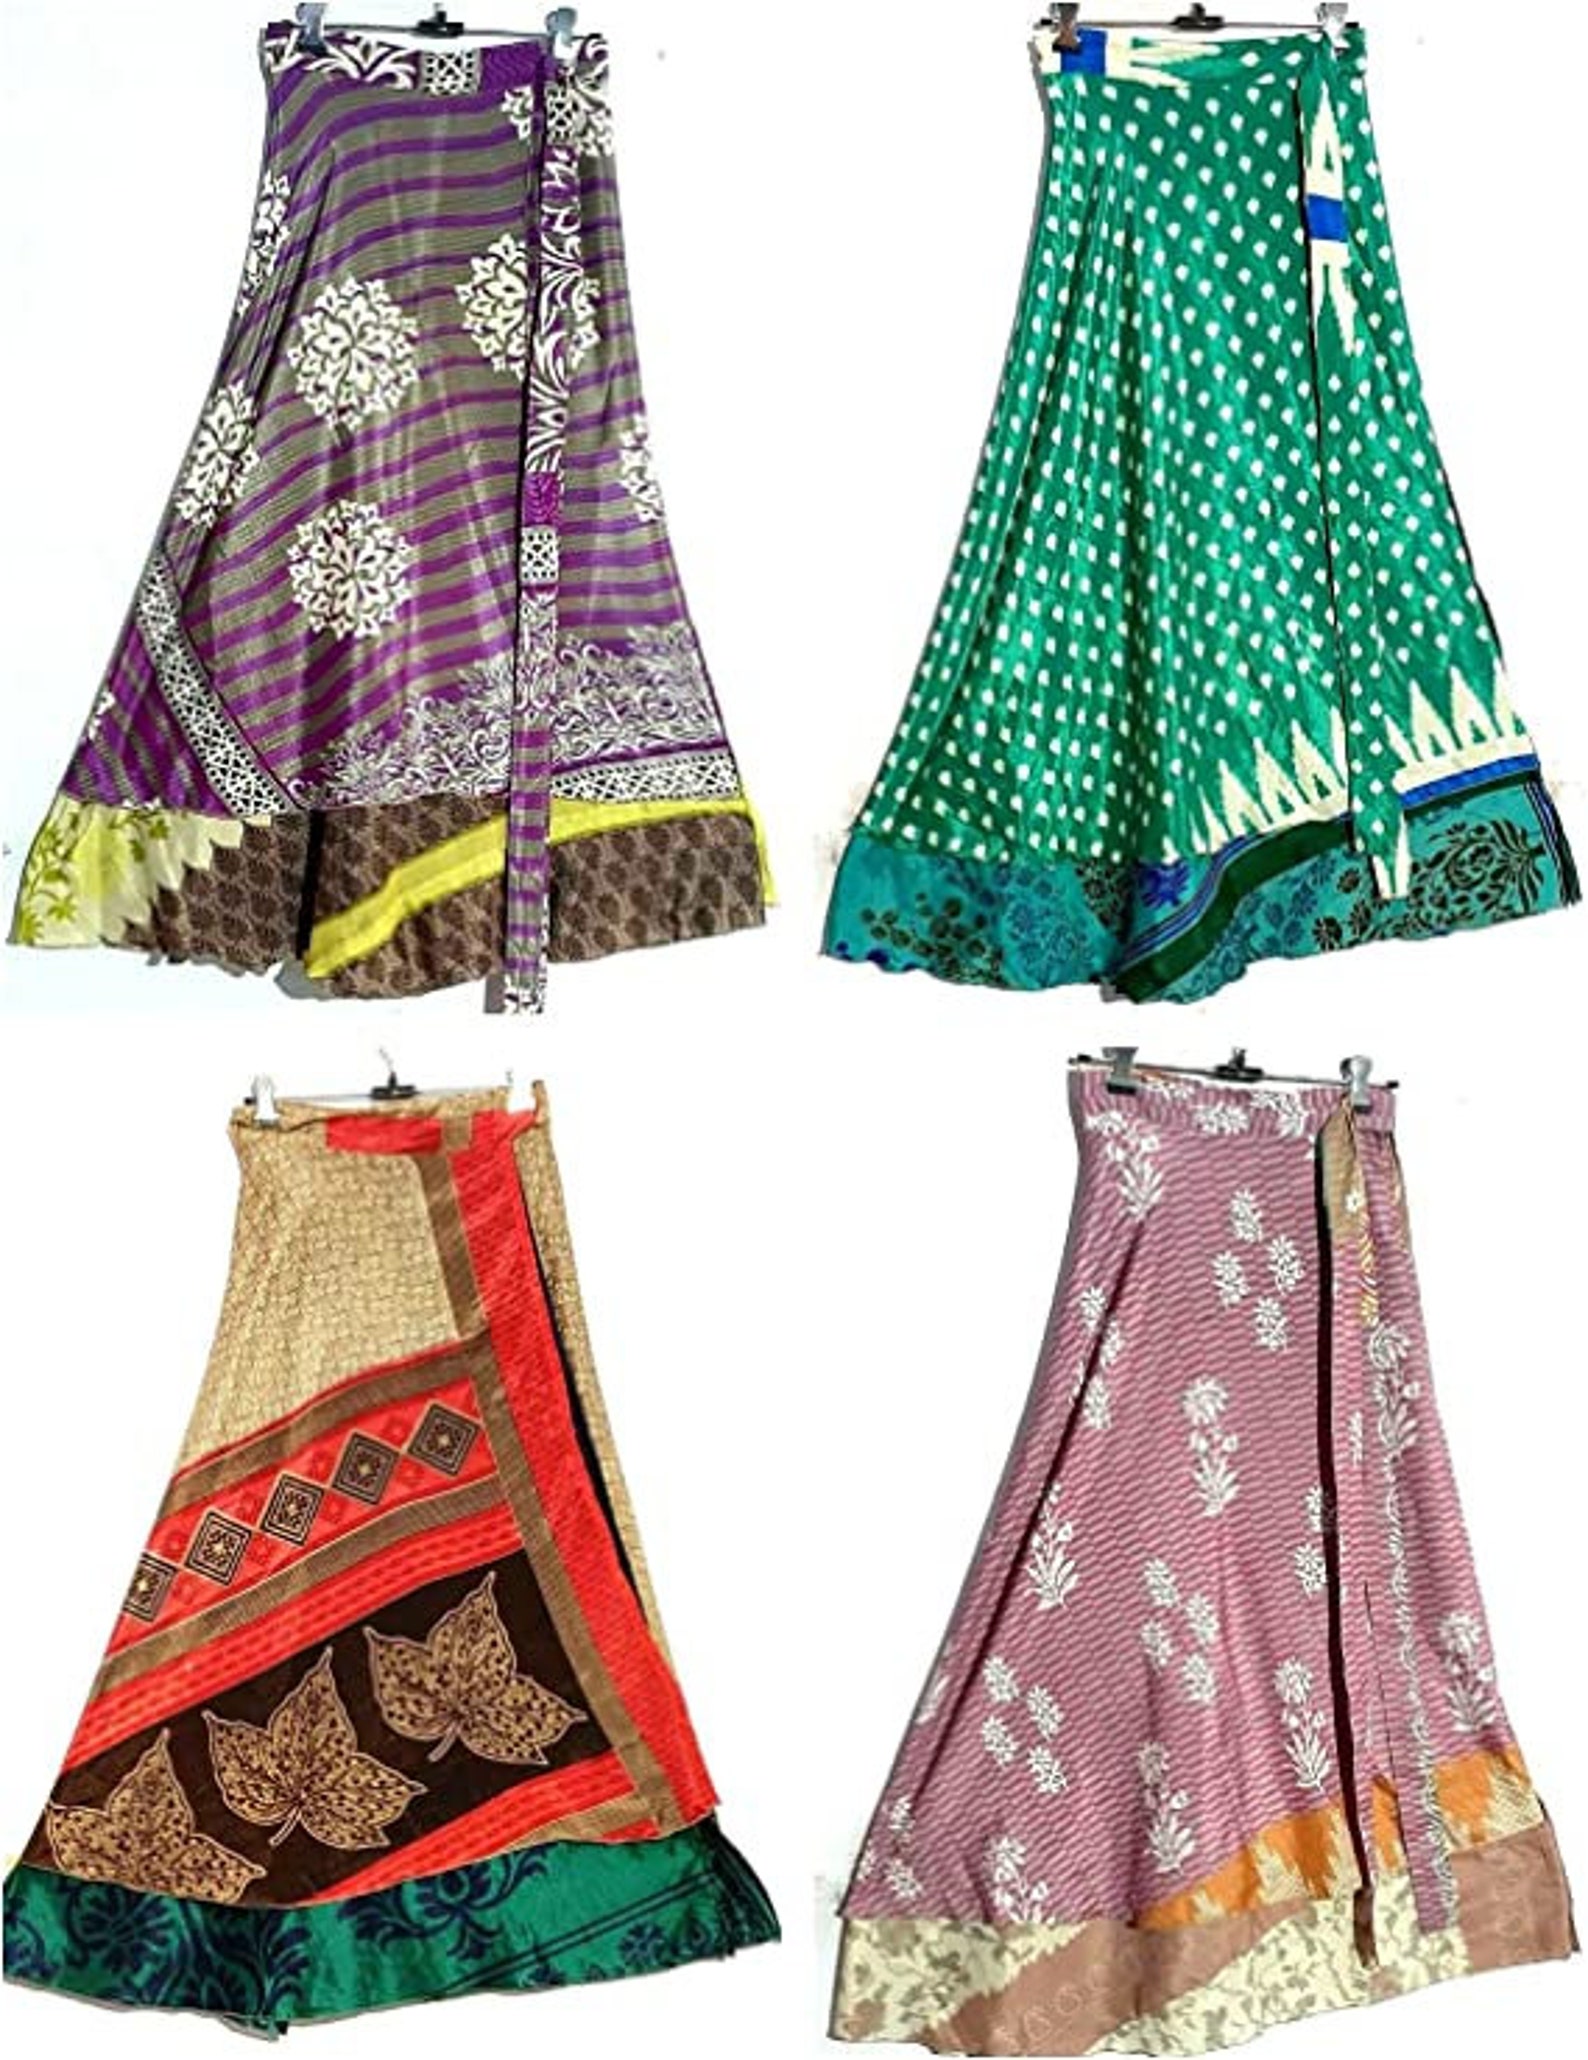 SALE ON Indian Vintage Art Silk Sari Wrap Skirts for Women & - Etsy